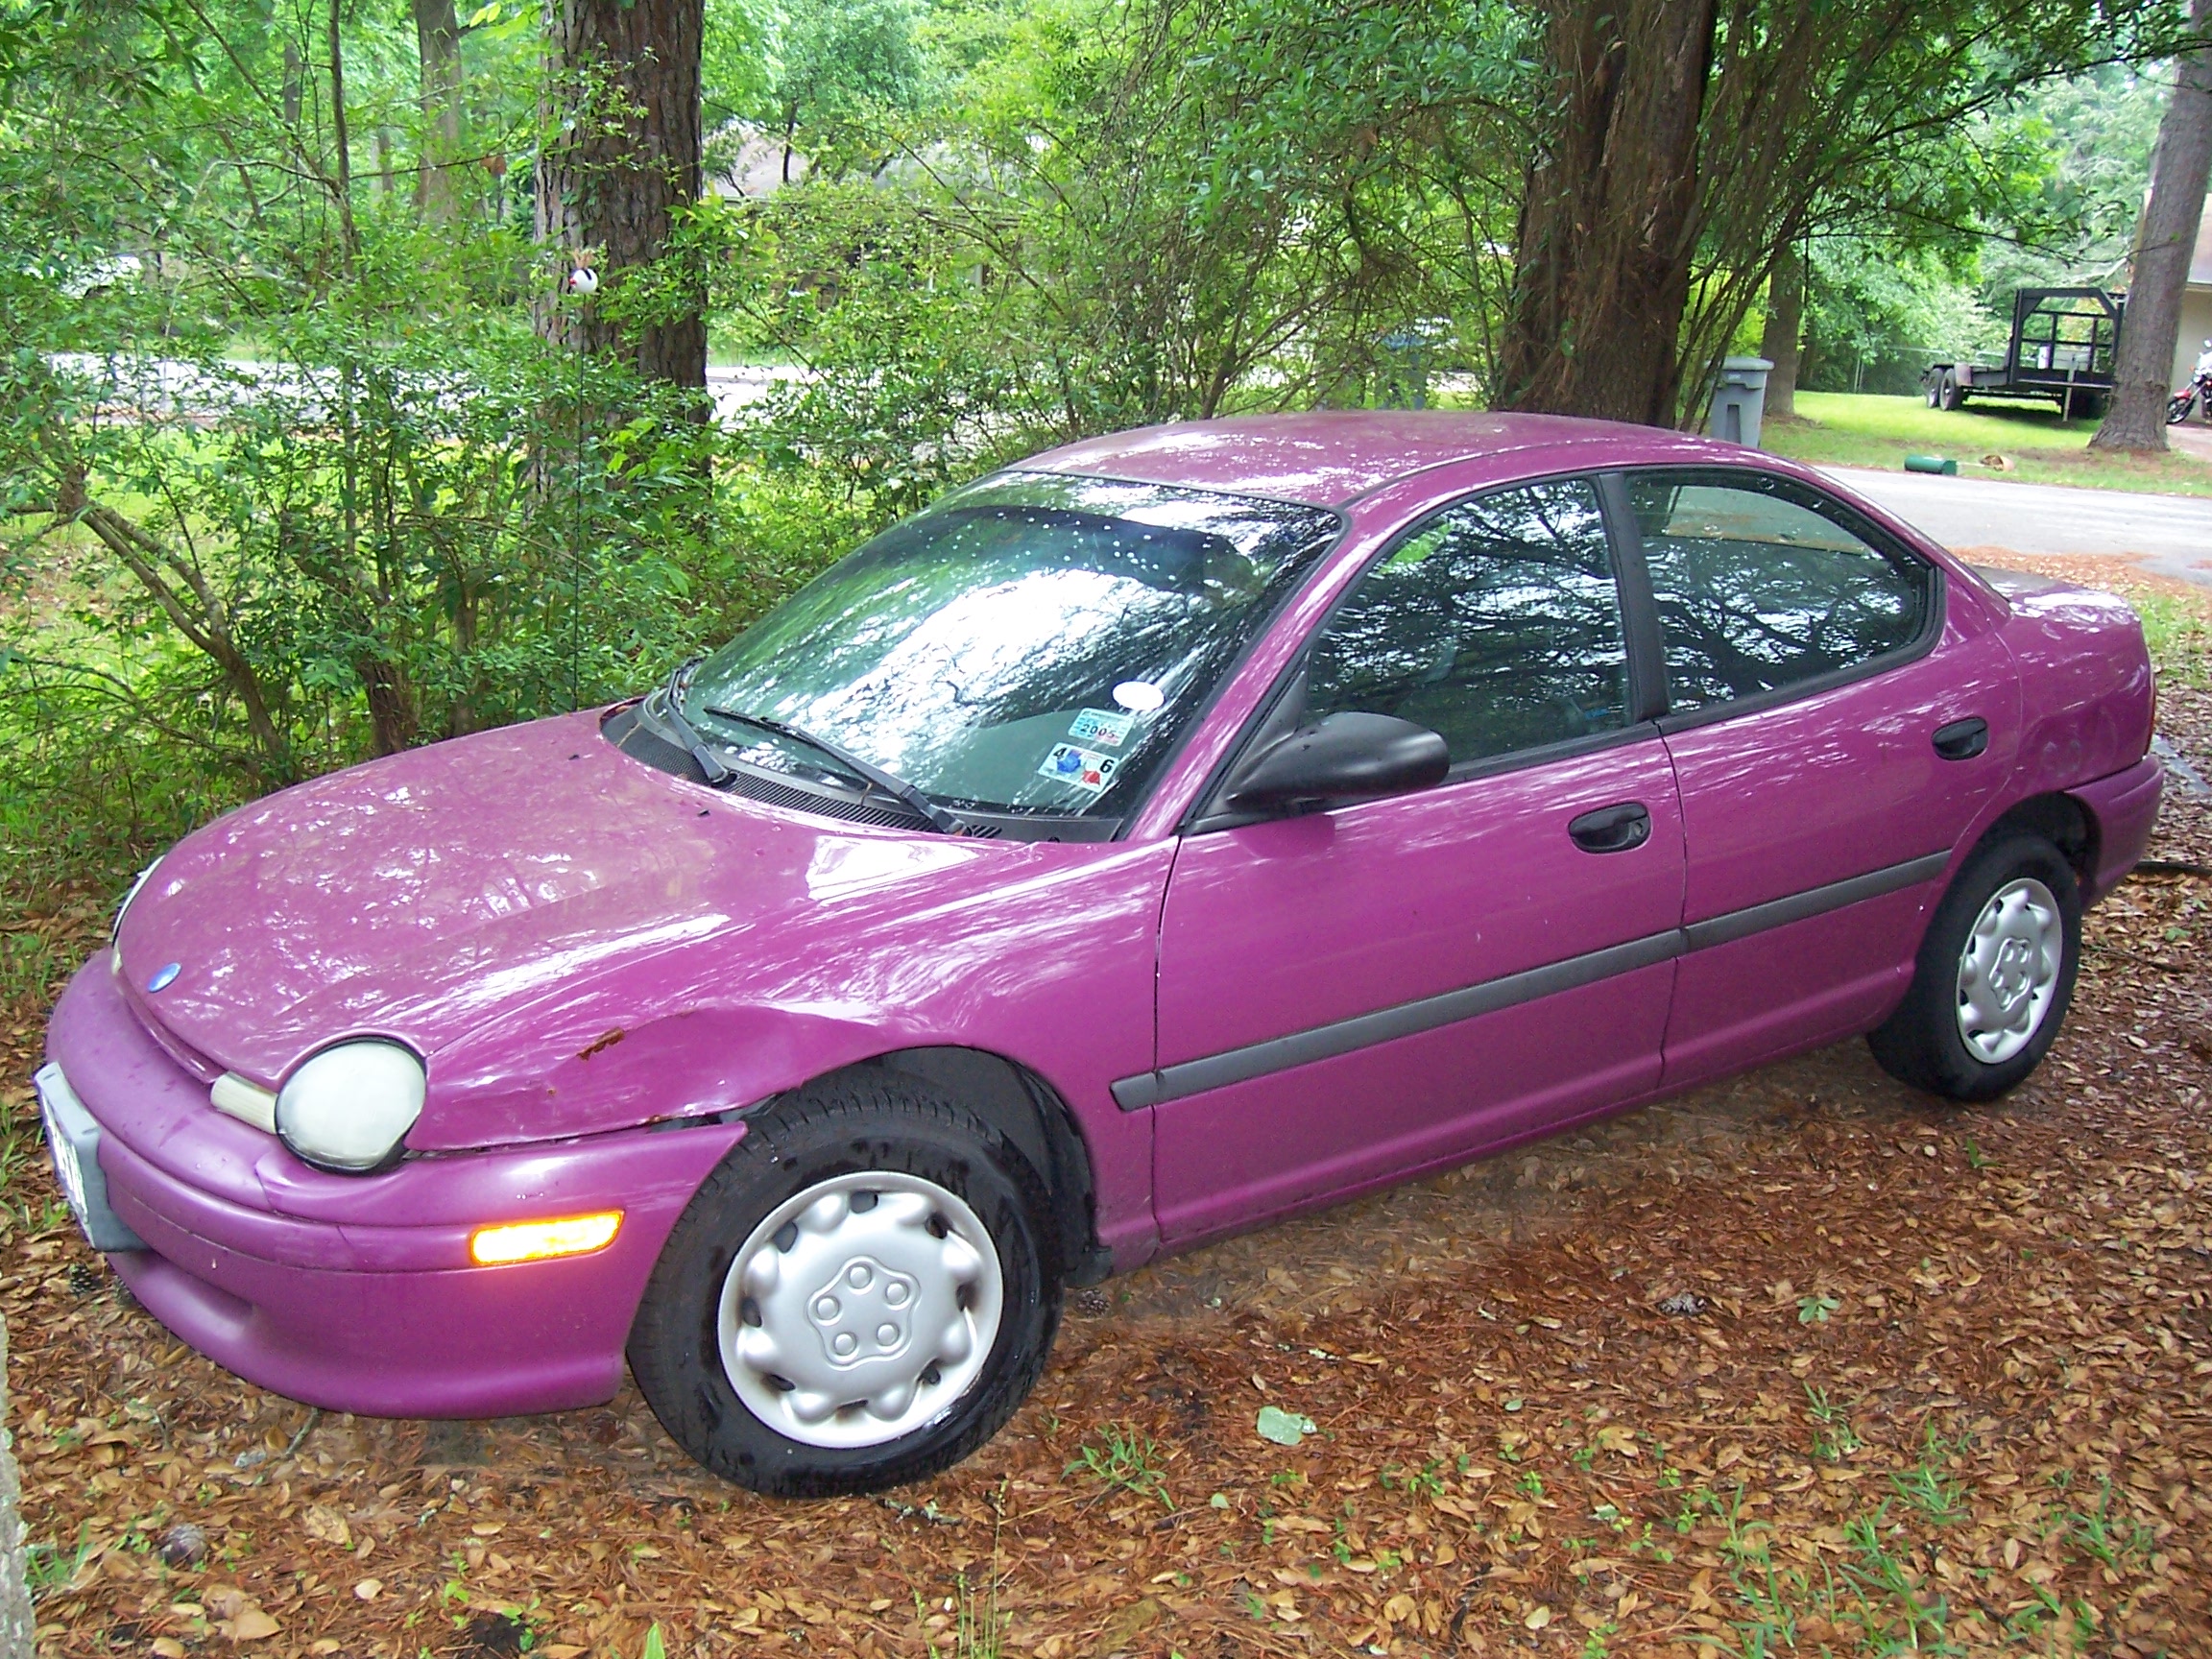 File:1997 Plymouth Neon Purple.jpg - Wikimedia Commons